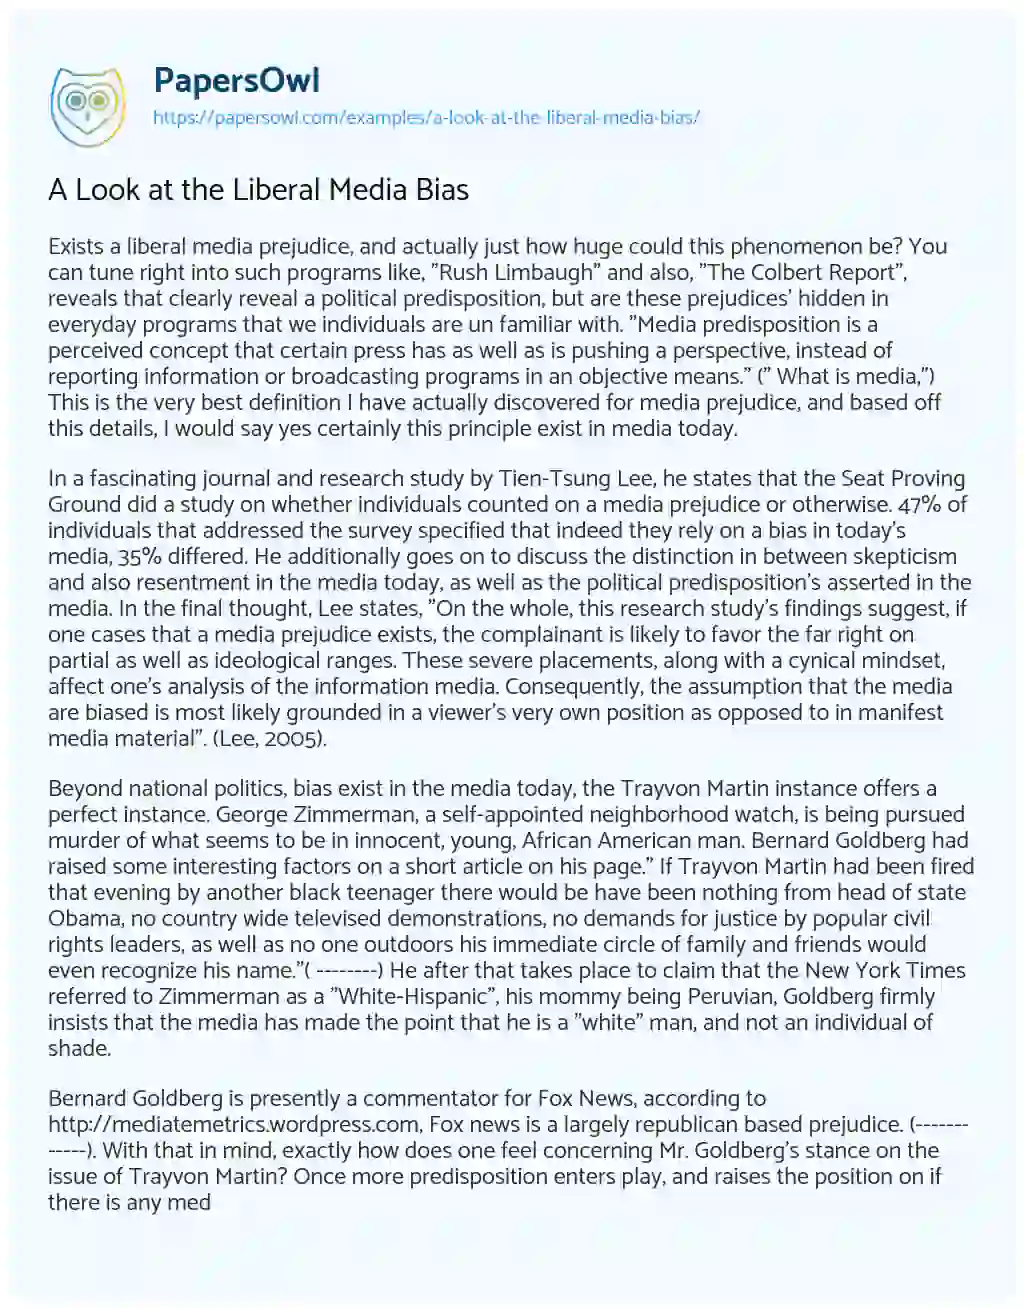 A Look at the Liberal Media Bias essay